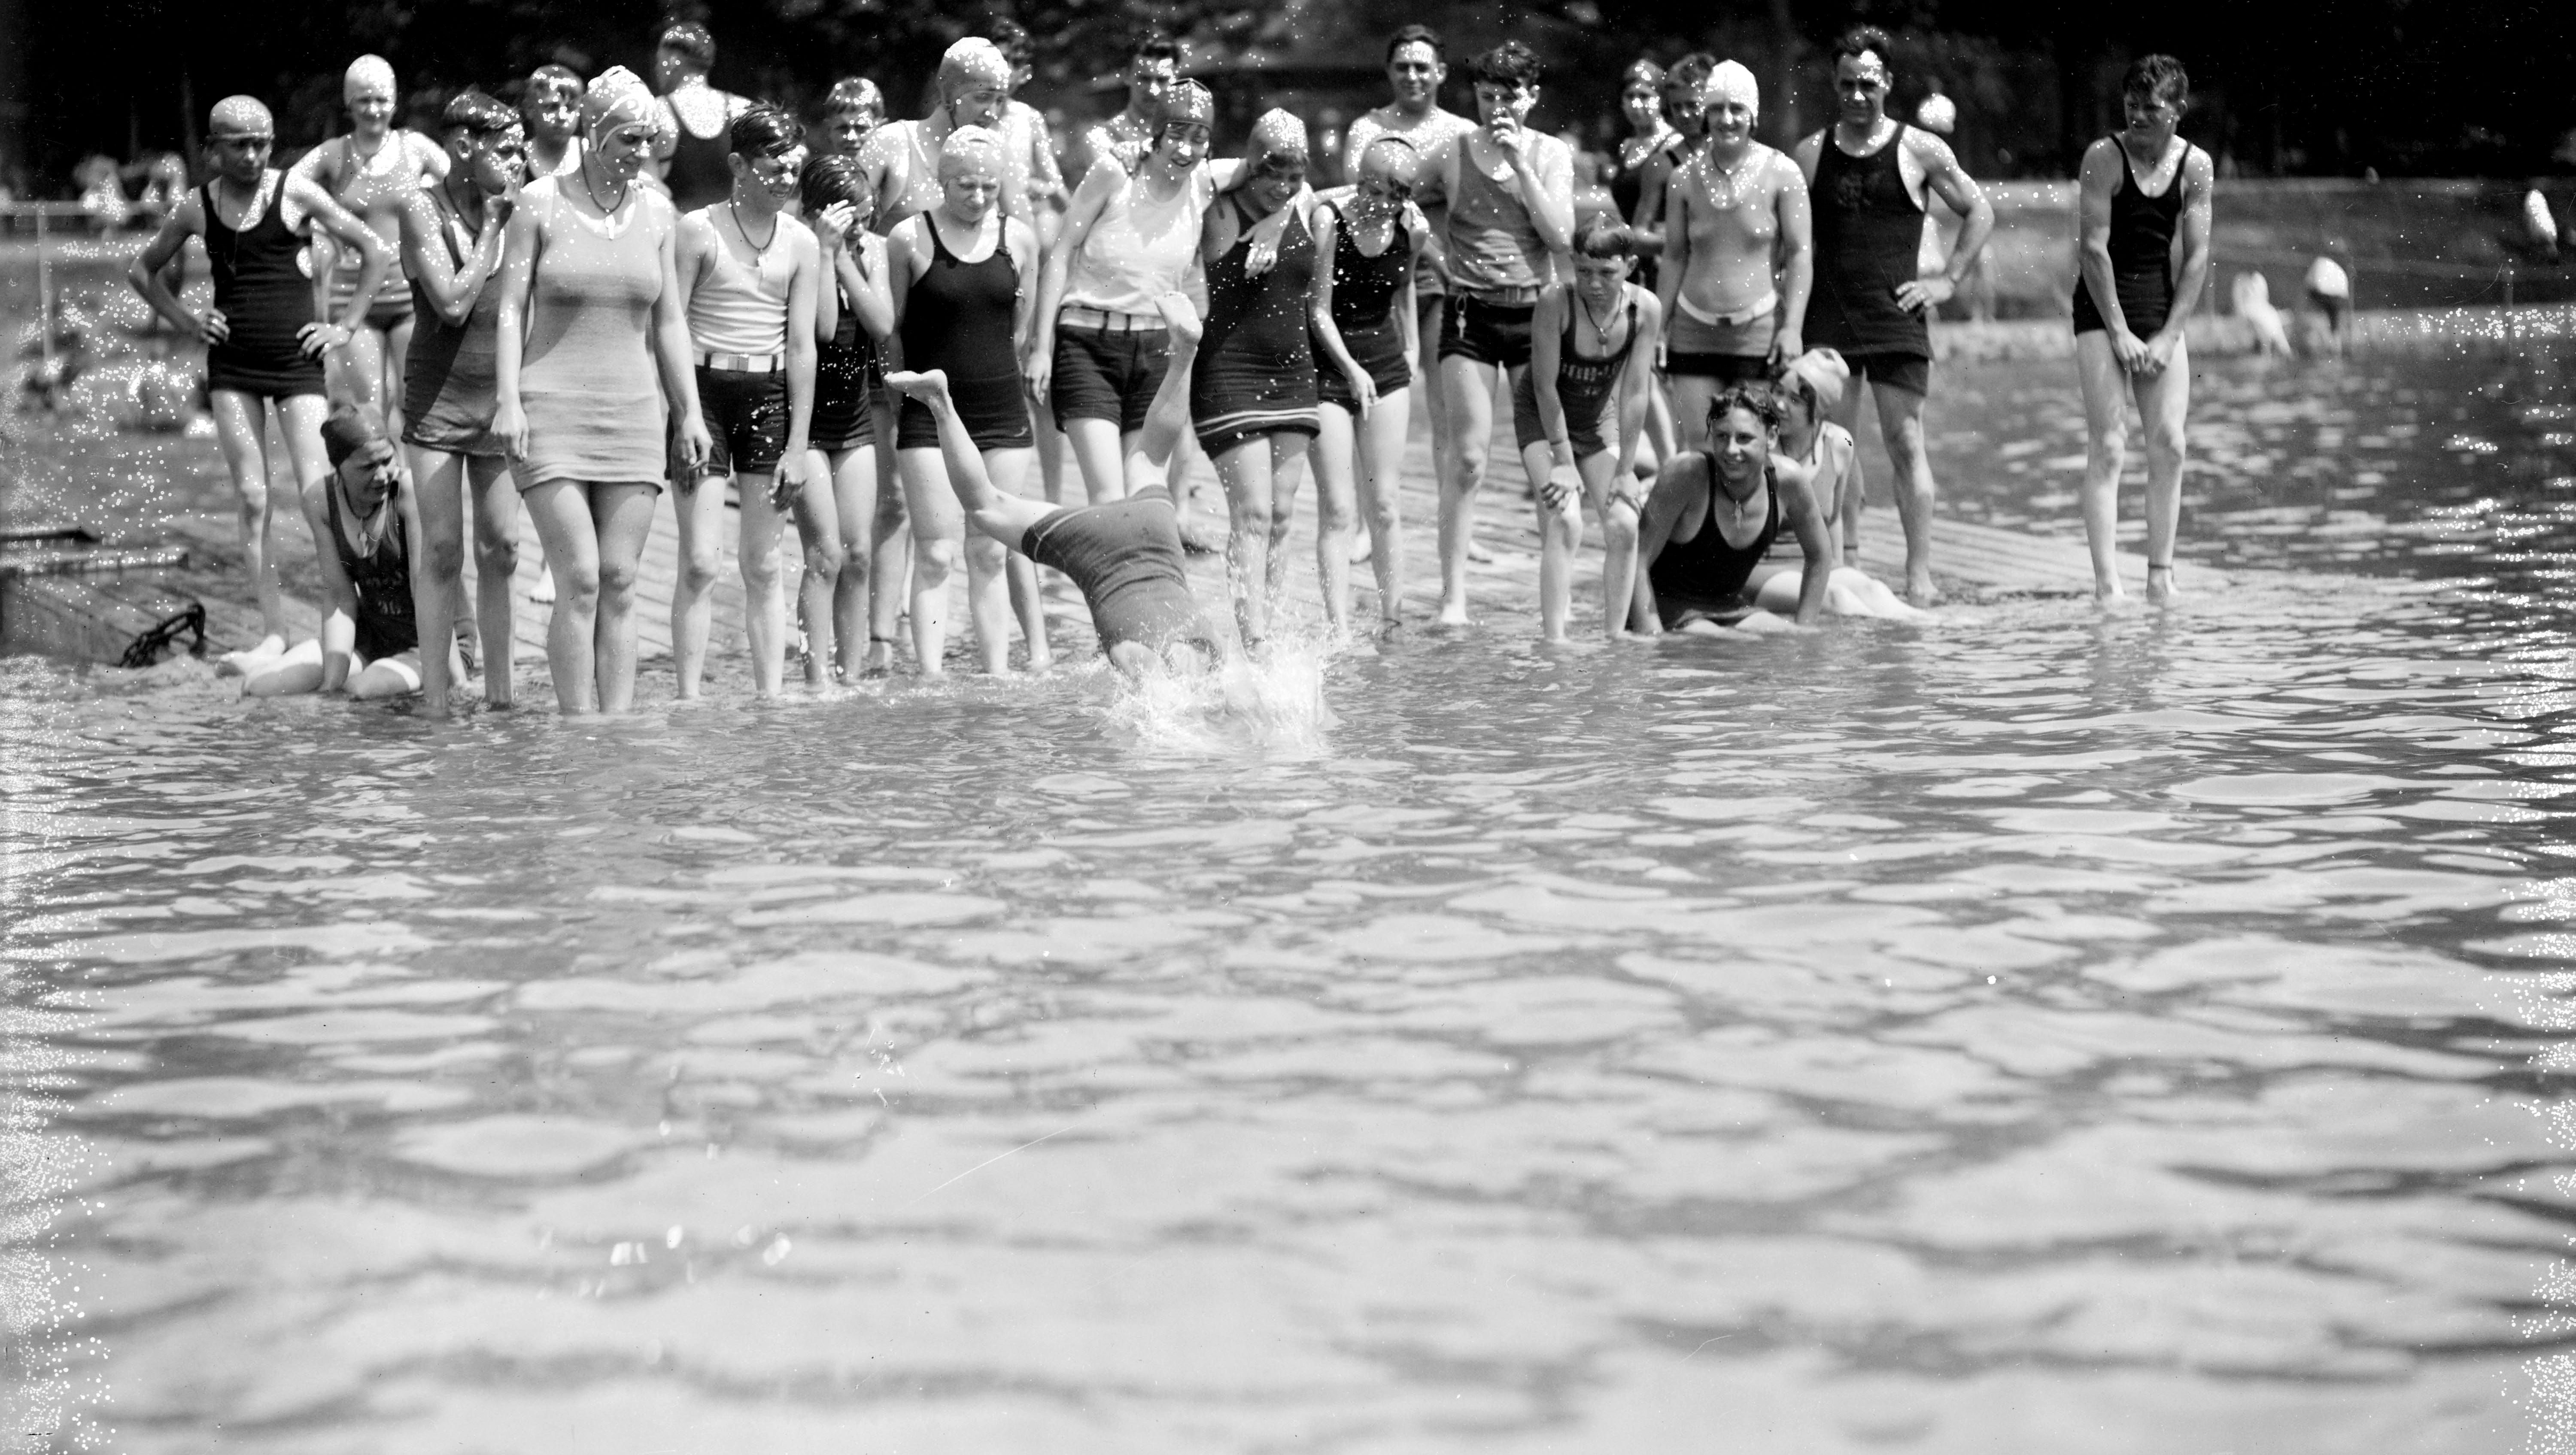 Bathers enjoy the water on a Boblo Island beach, circa 1920s.